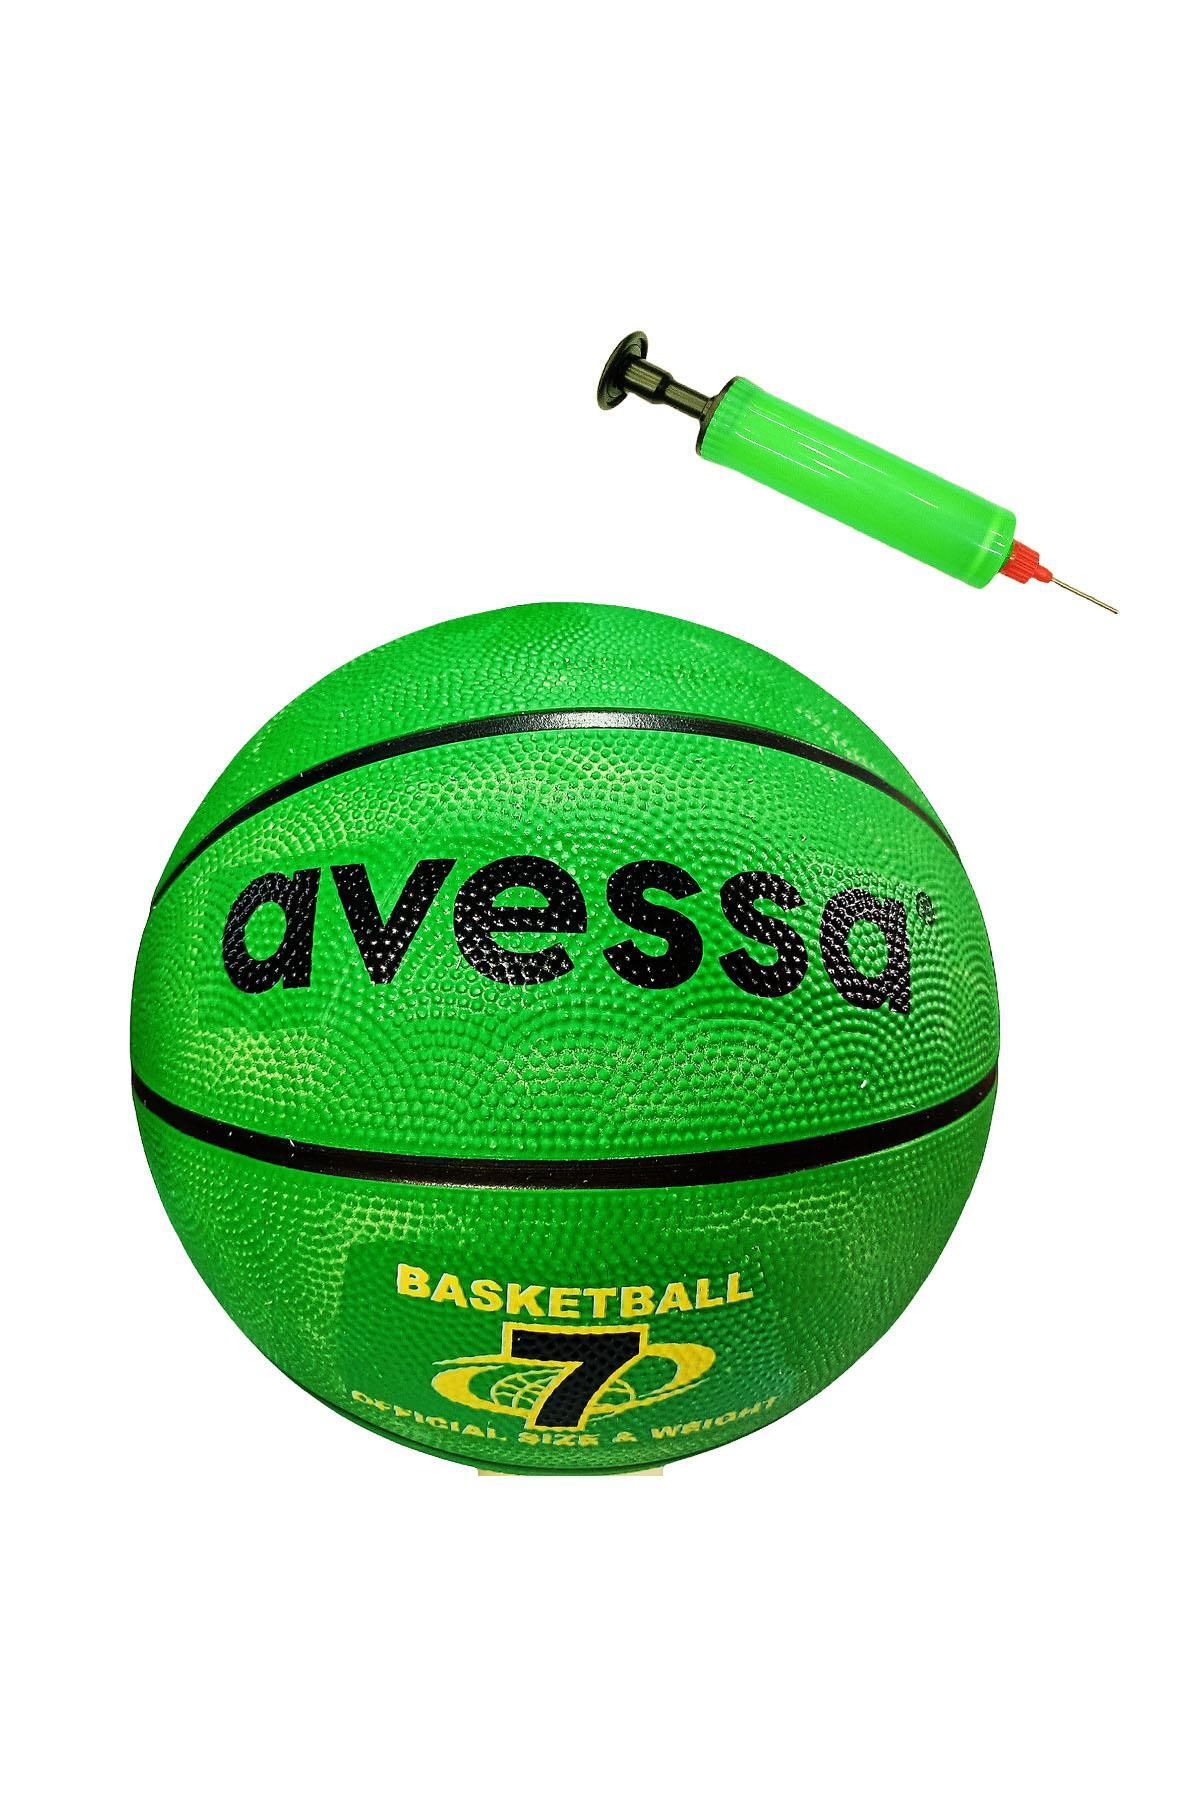 Avessa Brc-7y Basketbol Topu No7 Pompalı